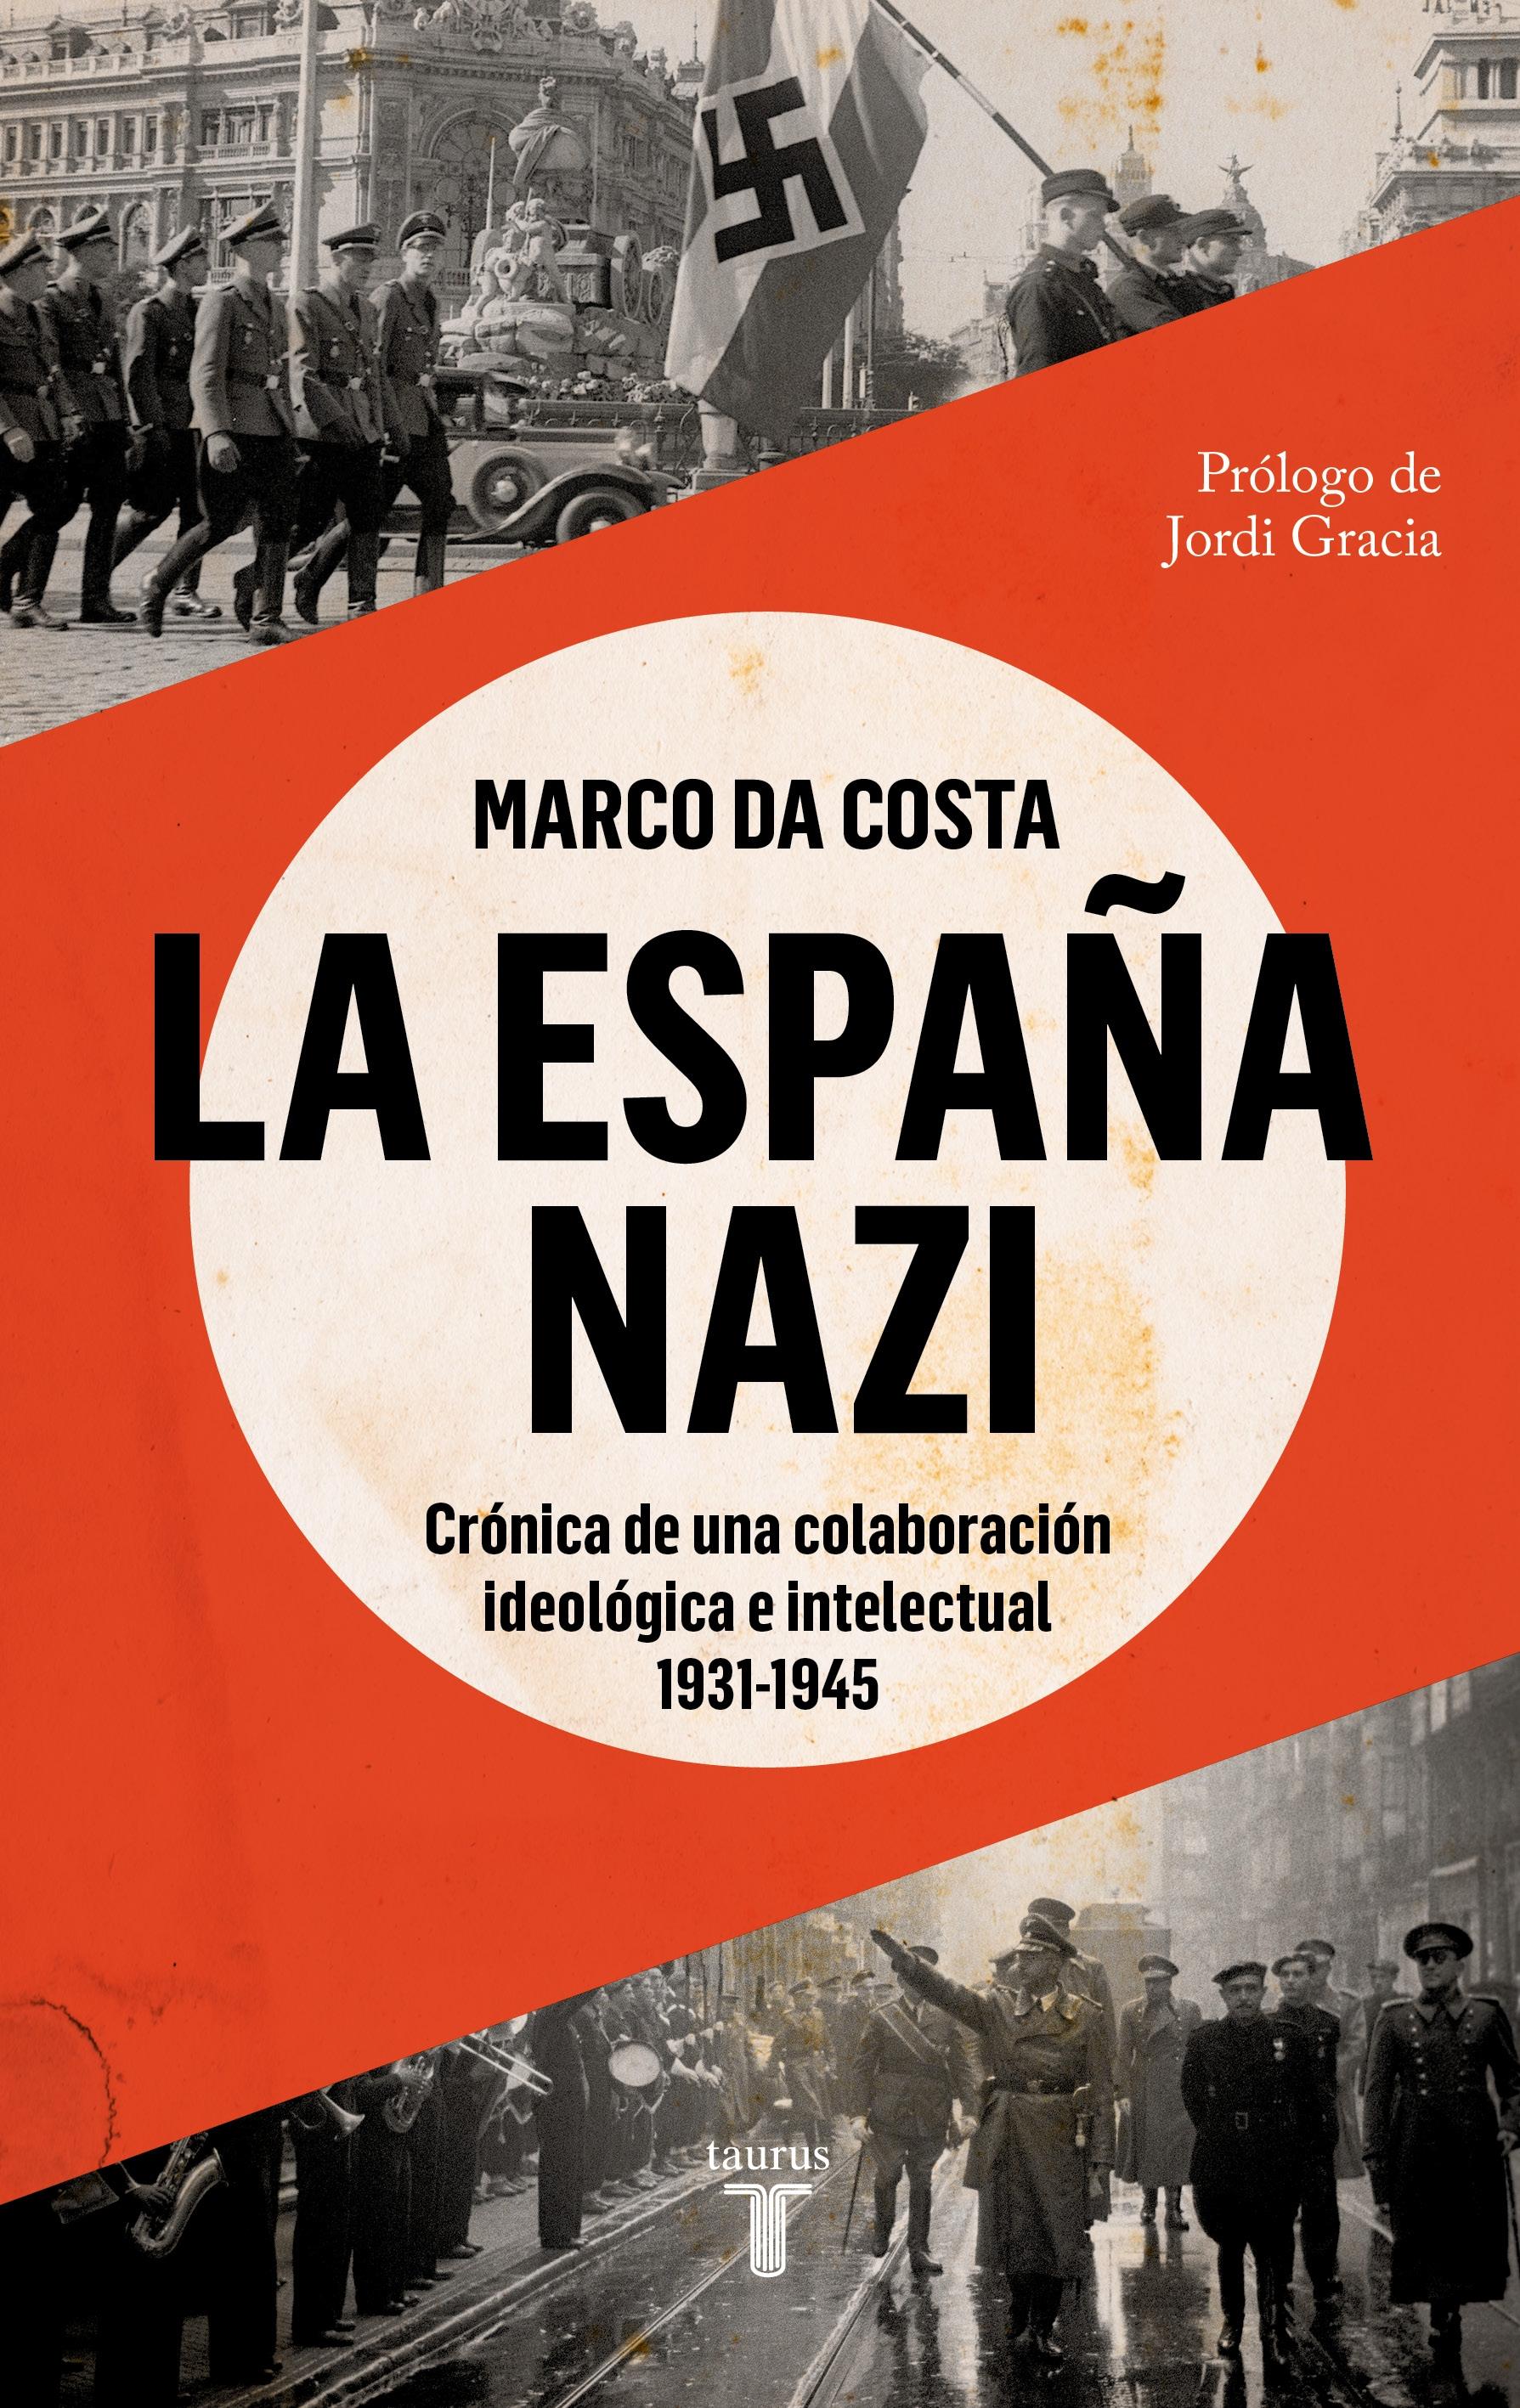 La España Nazi "Crónica de una Colaboración Ideológica e Intelectual, 1931-1945". 